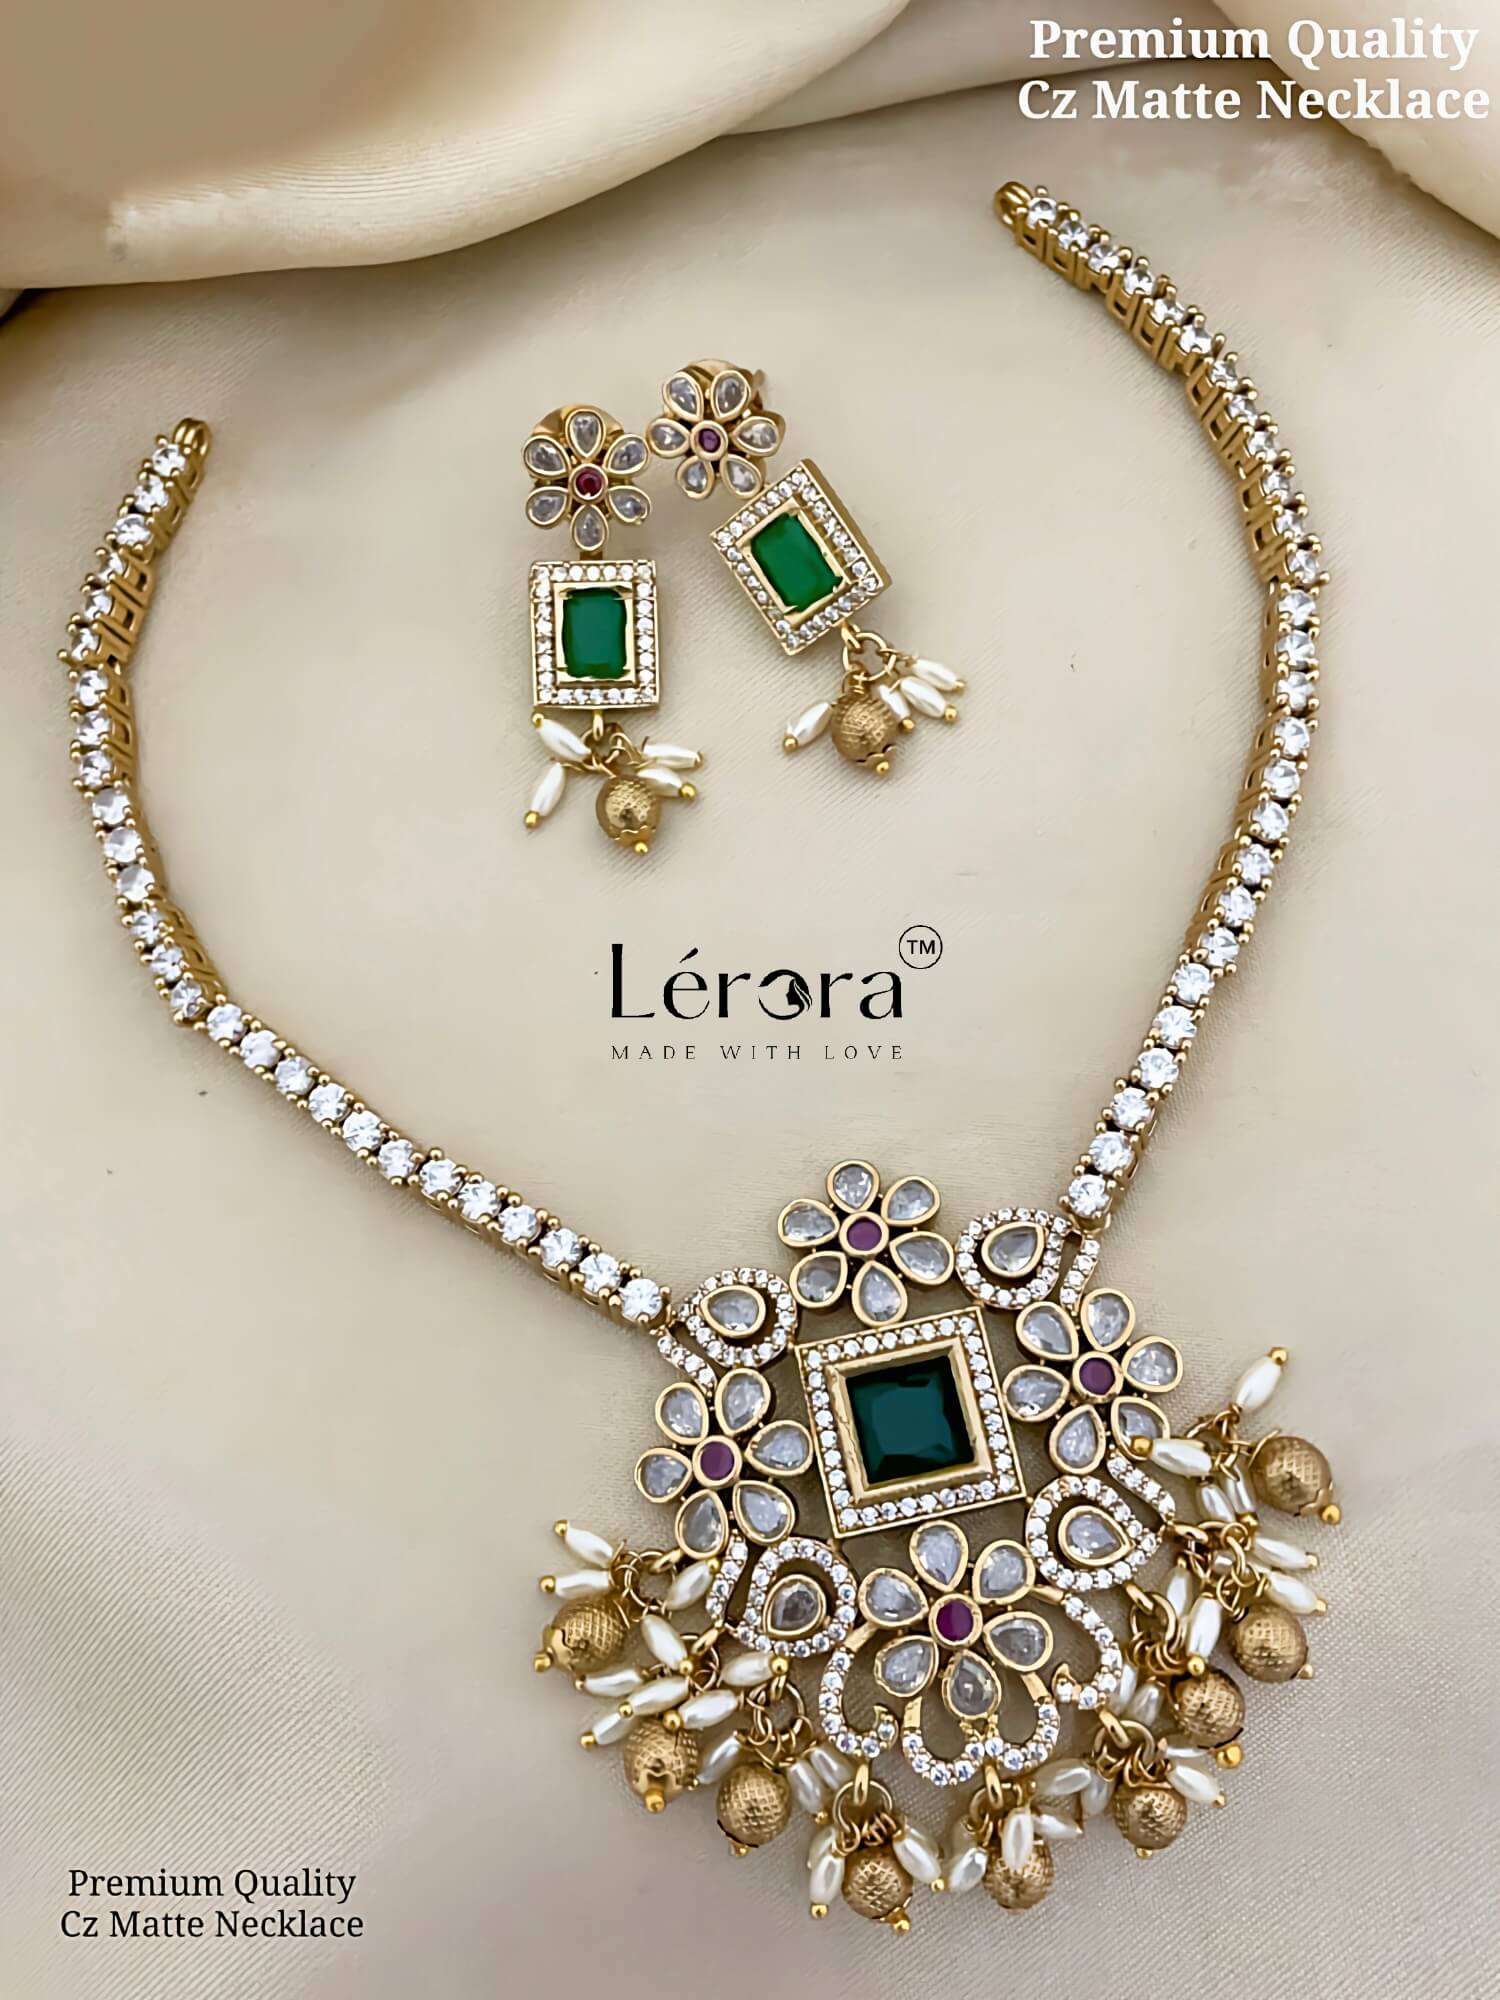 Lerora - Grand Stone Dollar Necklace. - Lerora